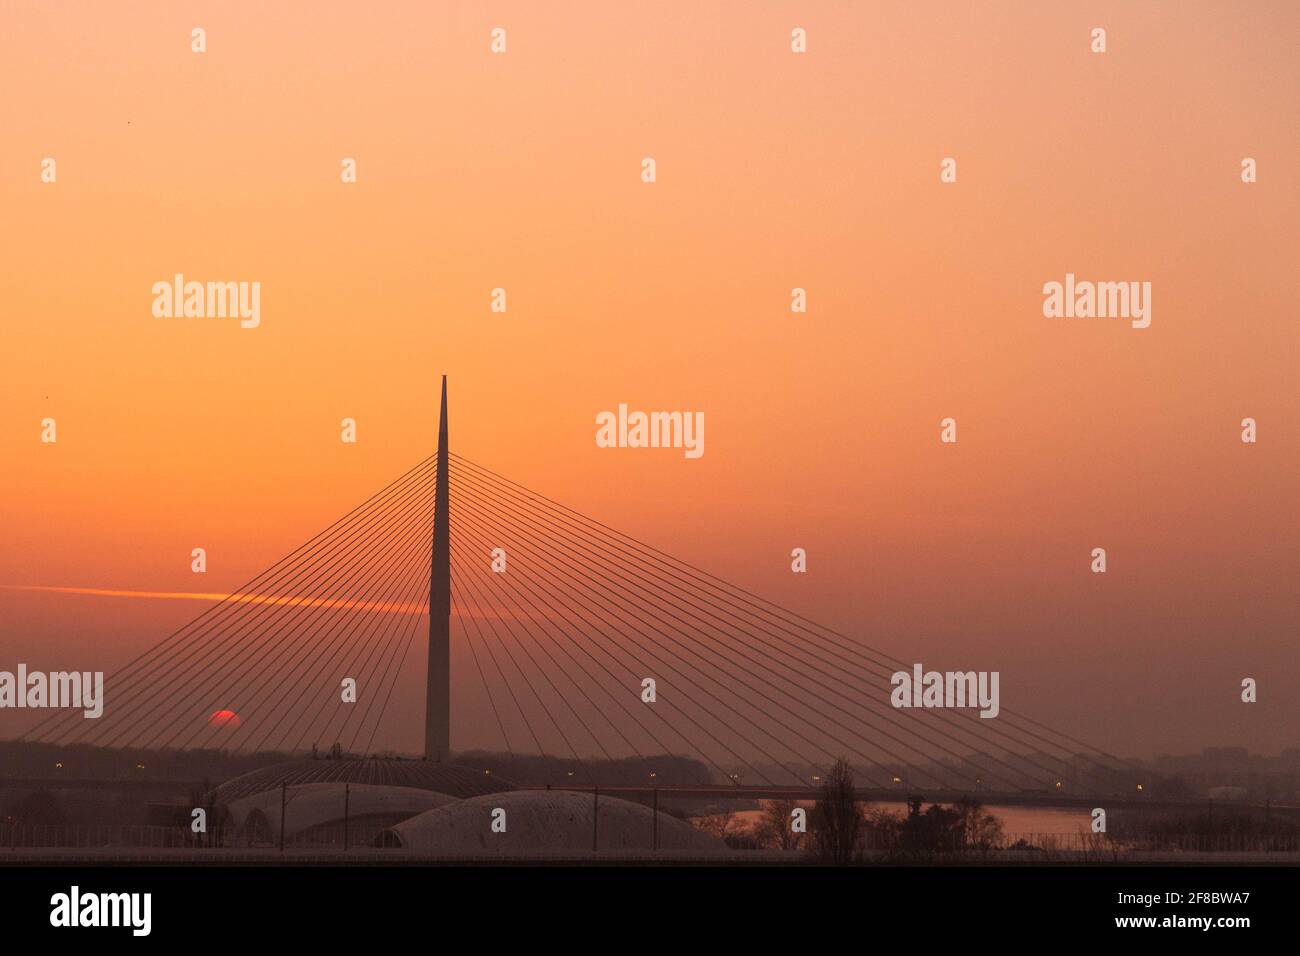 Ada bridge in Belgrade at sunset Stock Photo